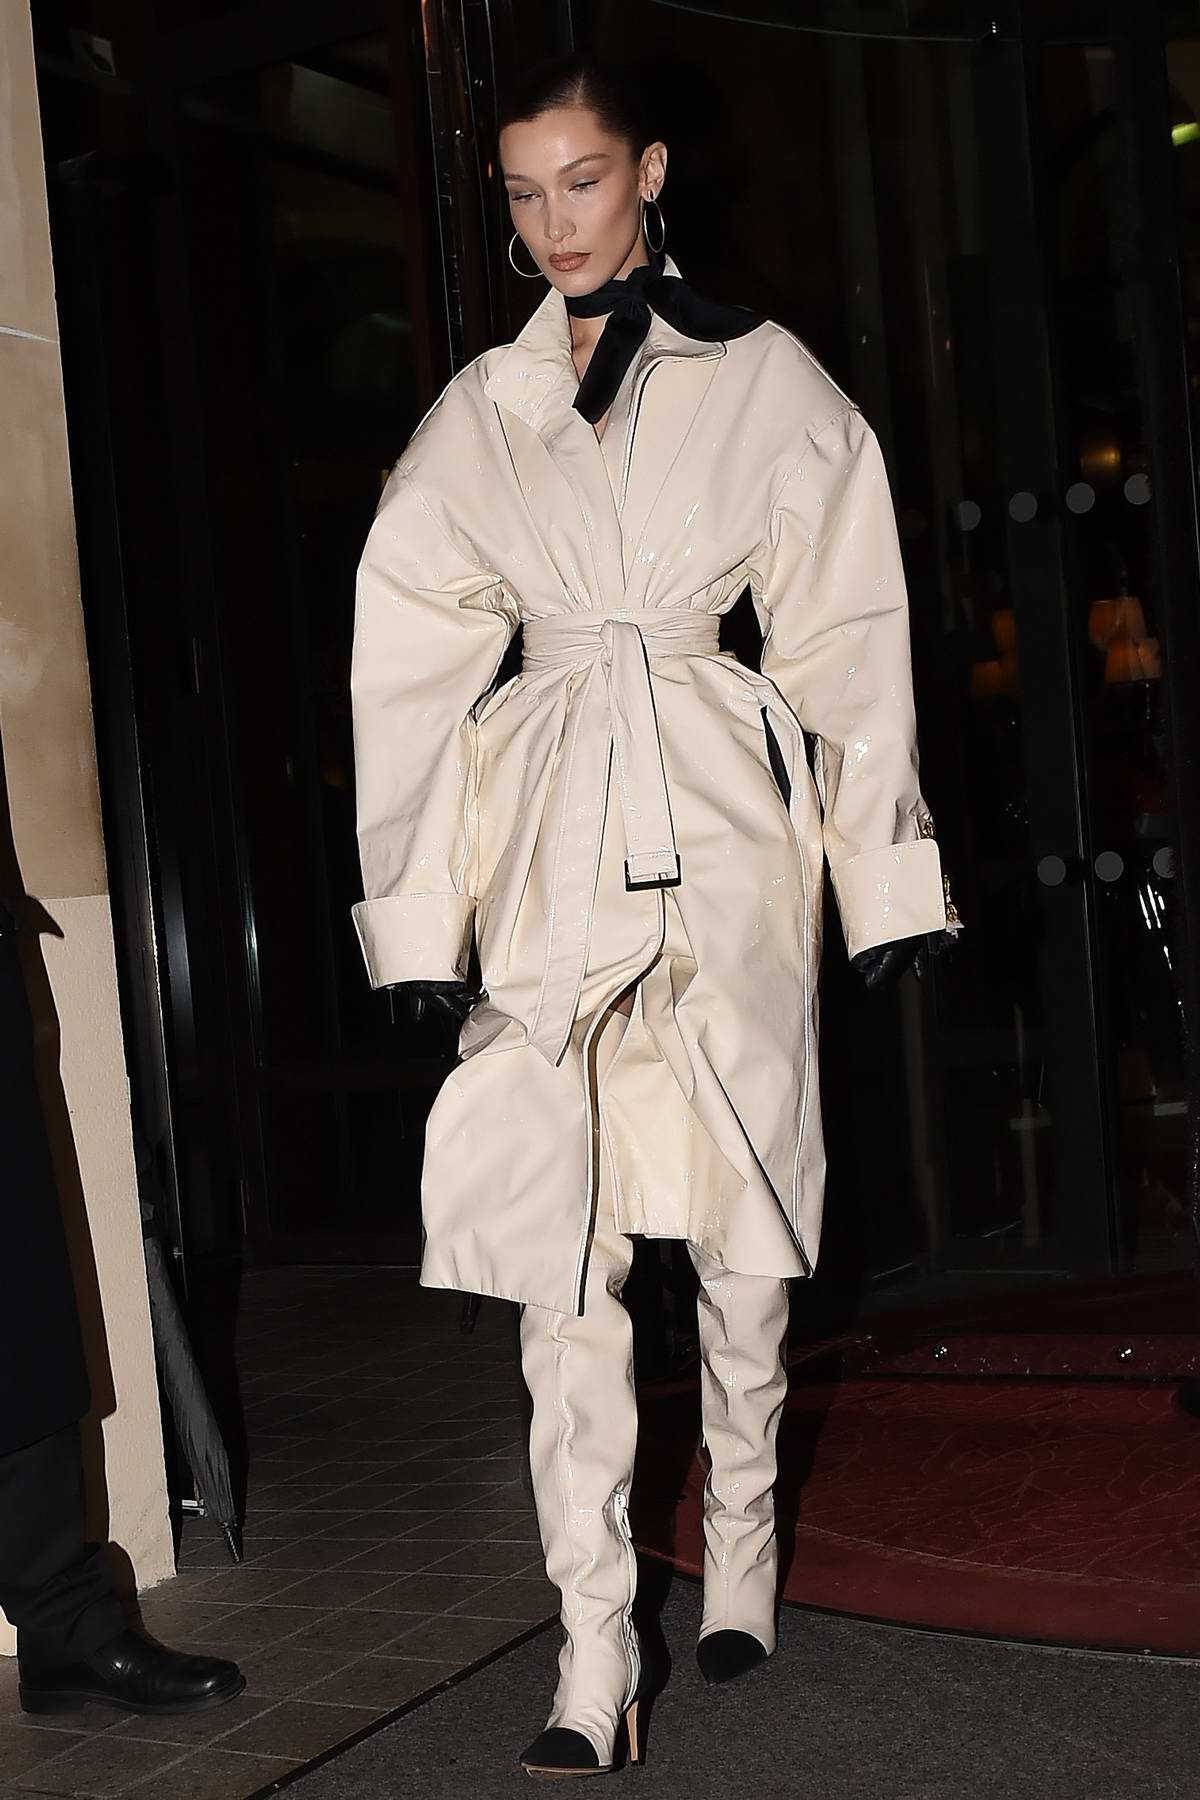 Bella Hadid stuns in navy crop top at Louis Vuitton's Paris